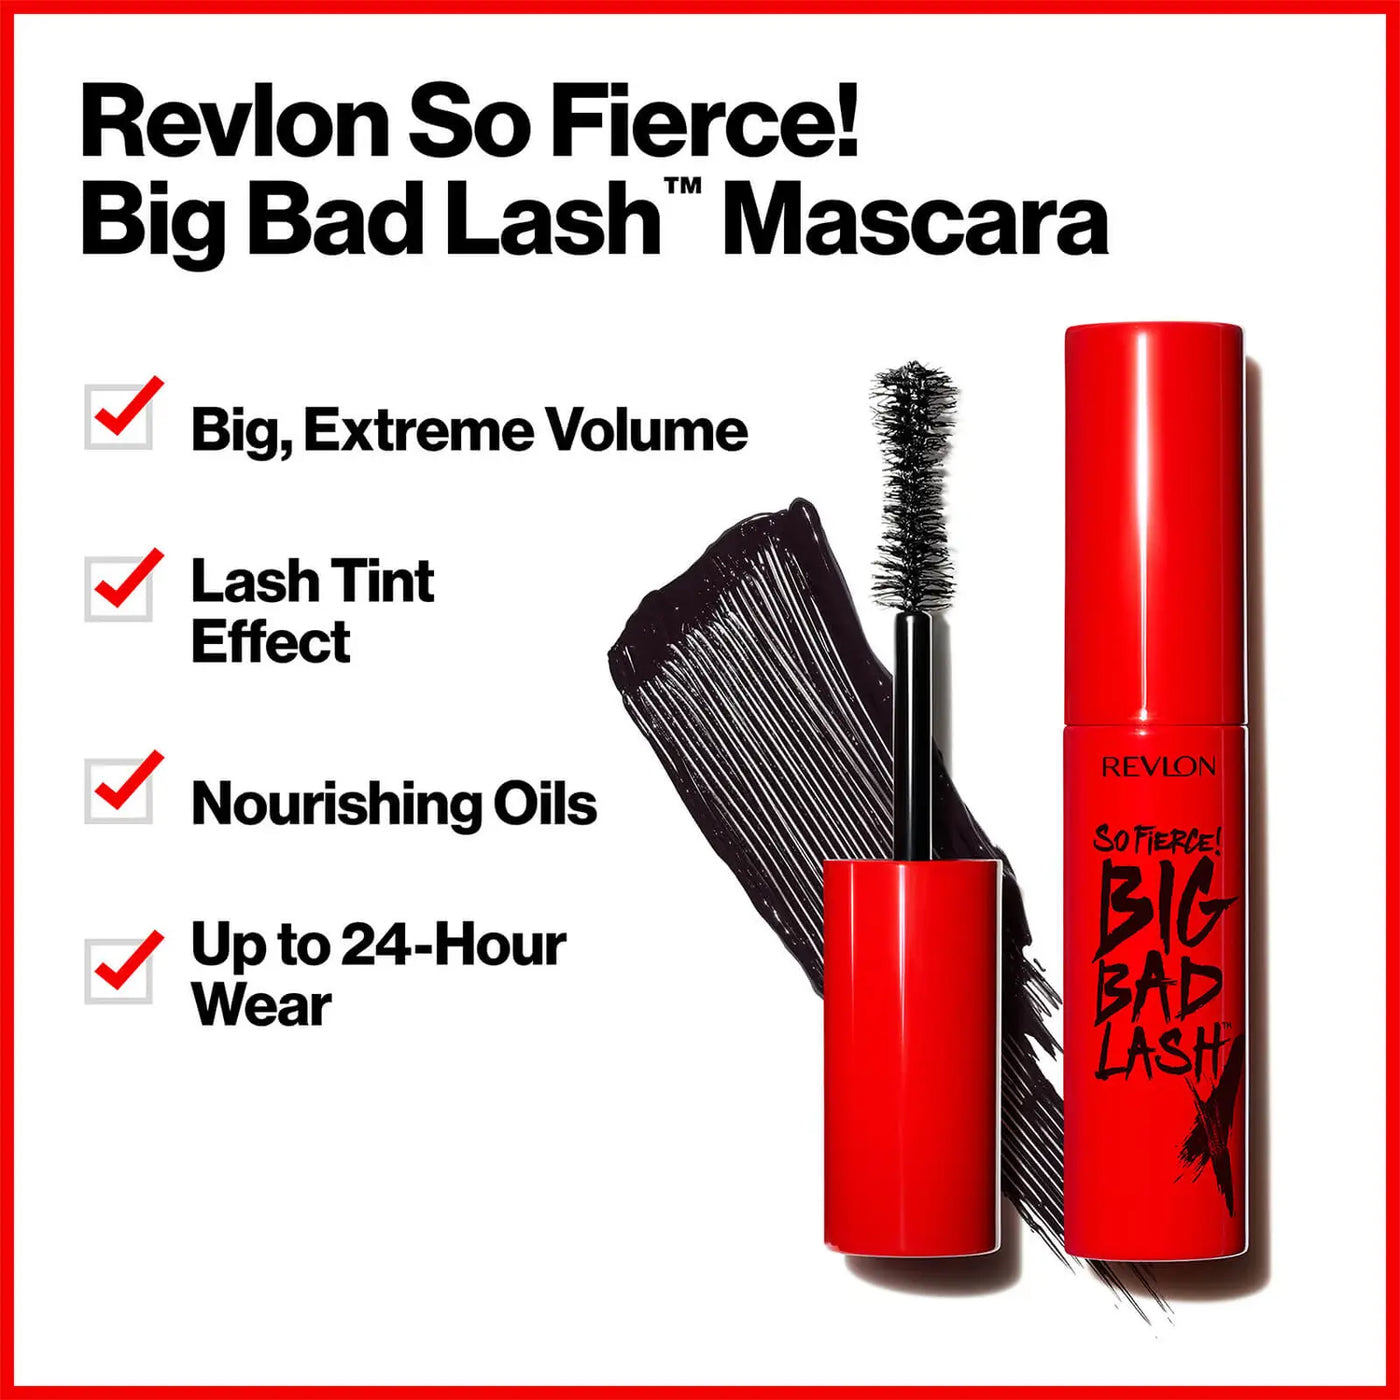 Revlon So Fierce Big Bad Lash Mascara - Special Offers